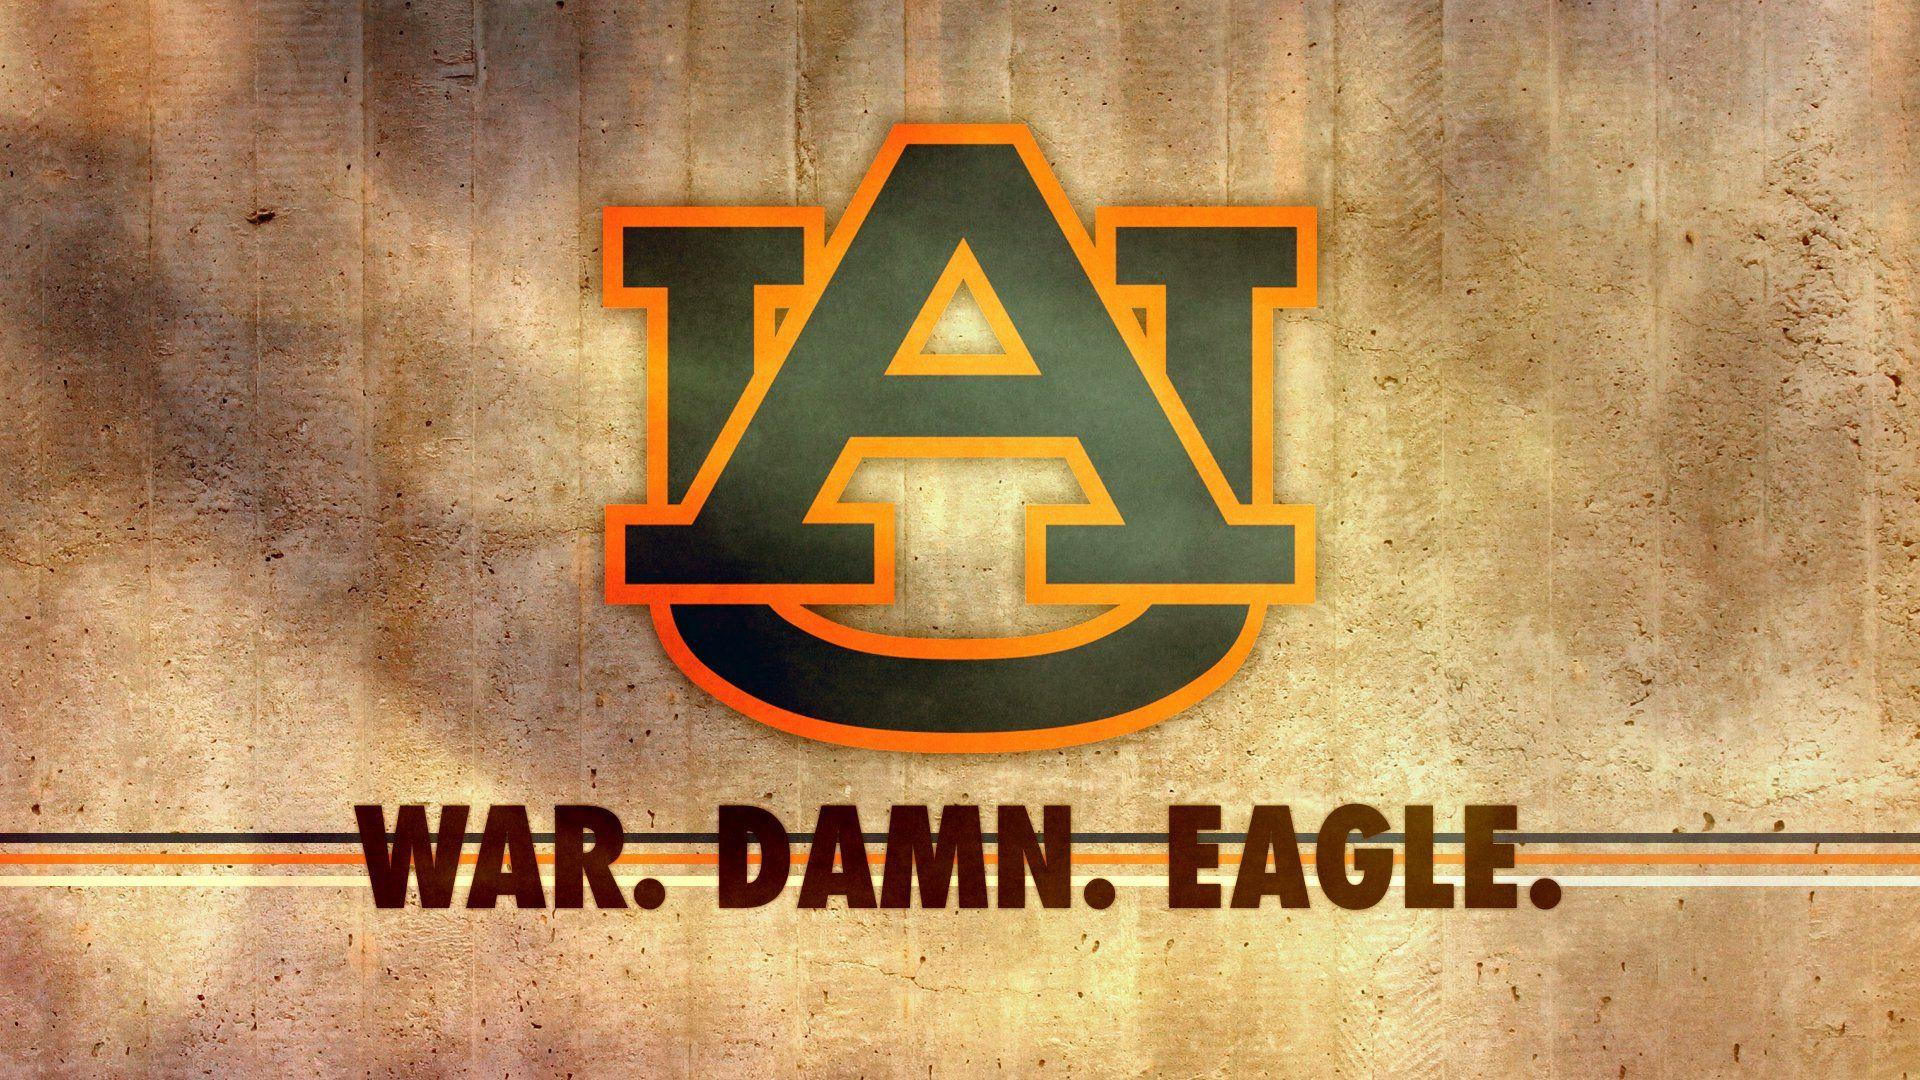 Auburn Football on Twitter New pixels for our WarEagle fam  WallpaperWednesday  httpstcoWWOBThH3r5  Twitter